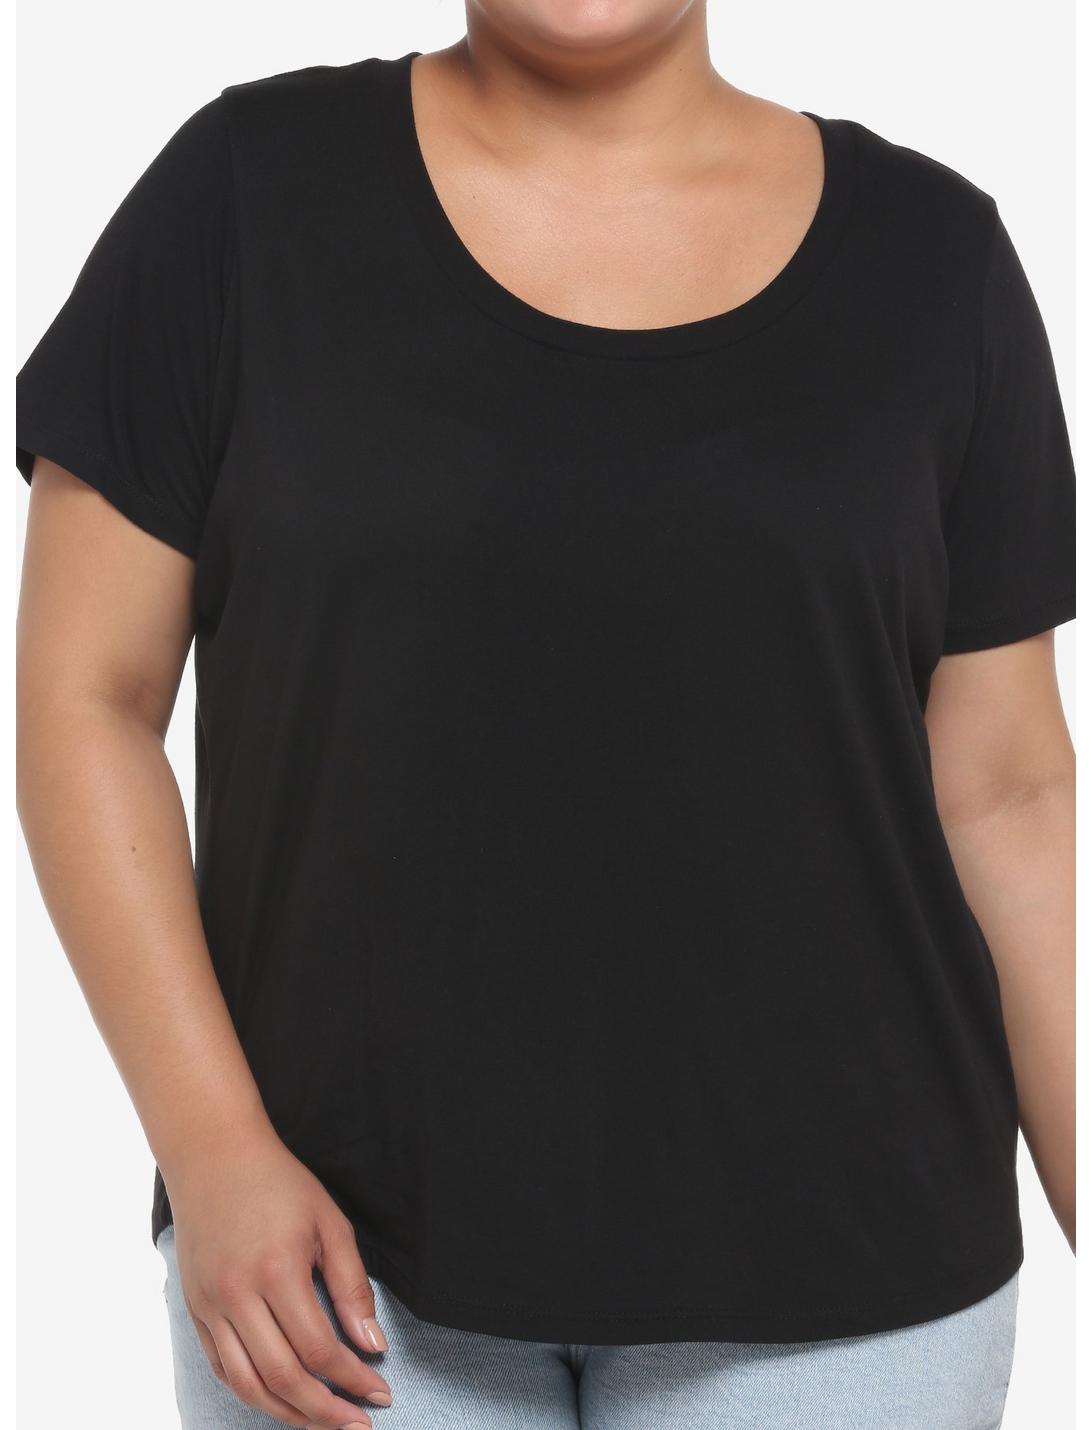 Her Universe Black Scoop Neck Favorite T-Shirt Plus Size, DEEP BLACK, hi-res